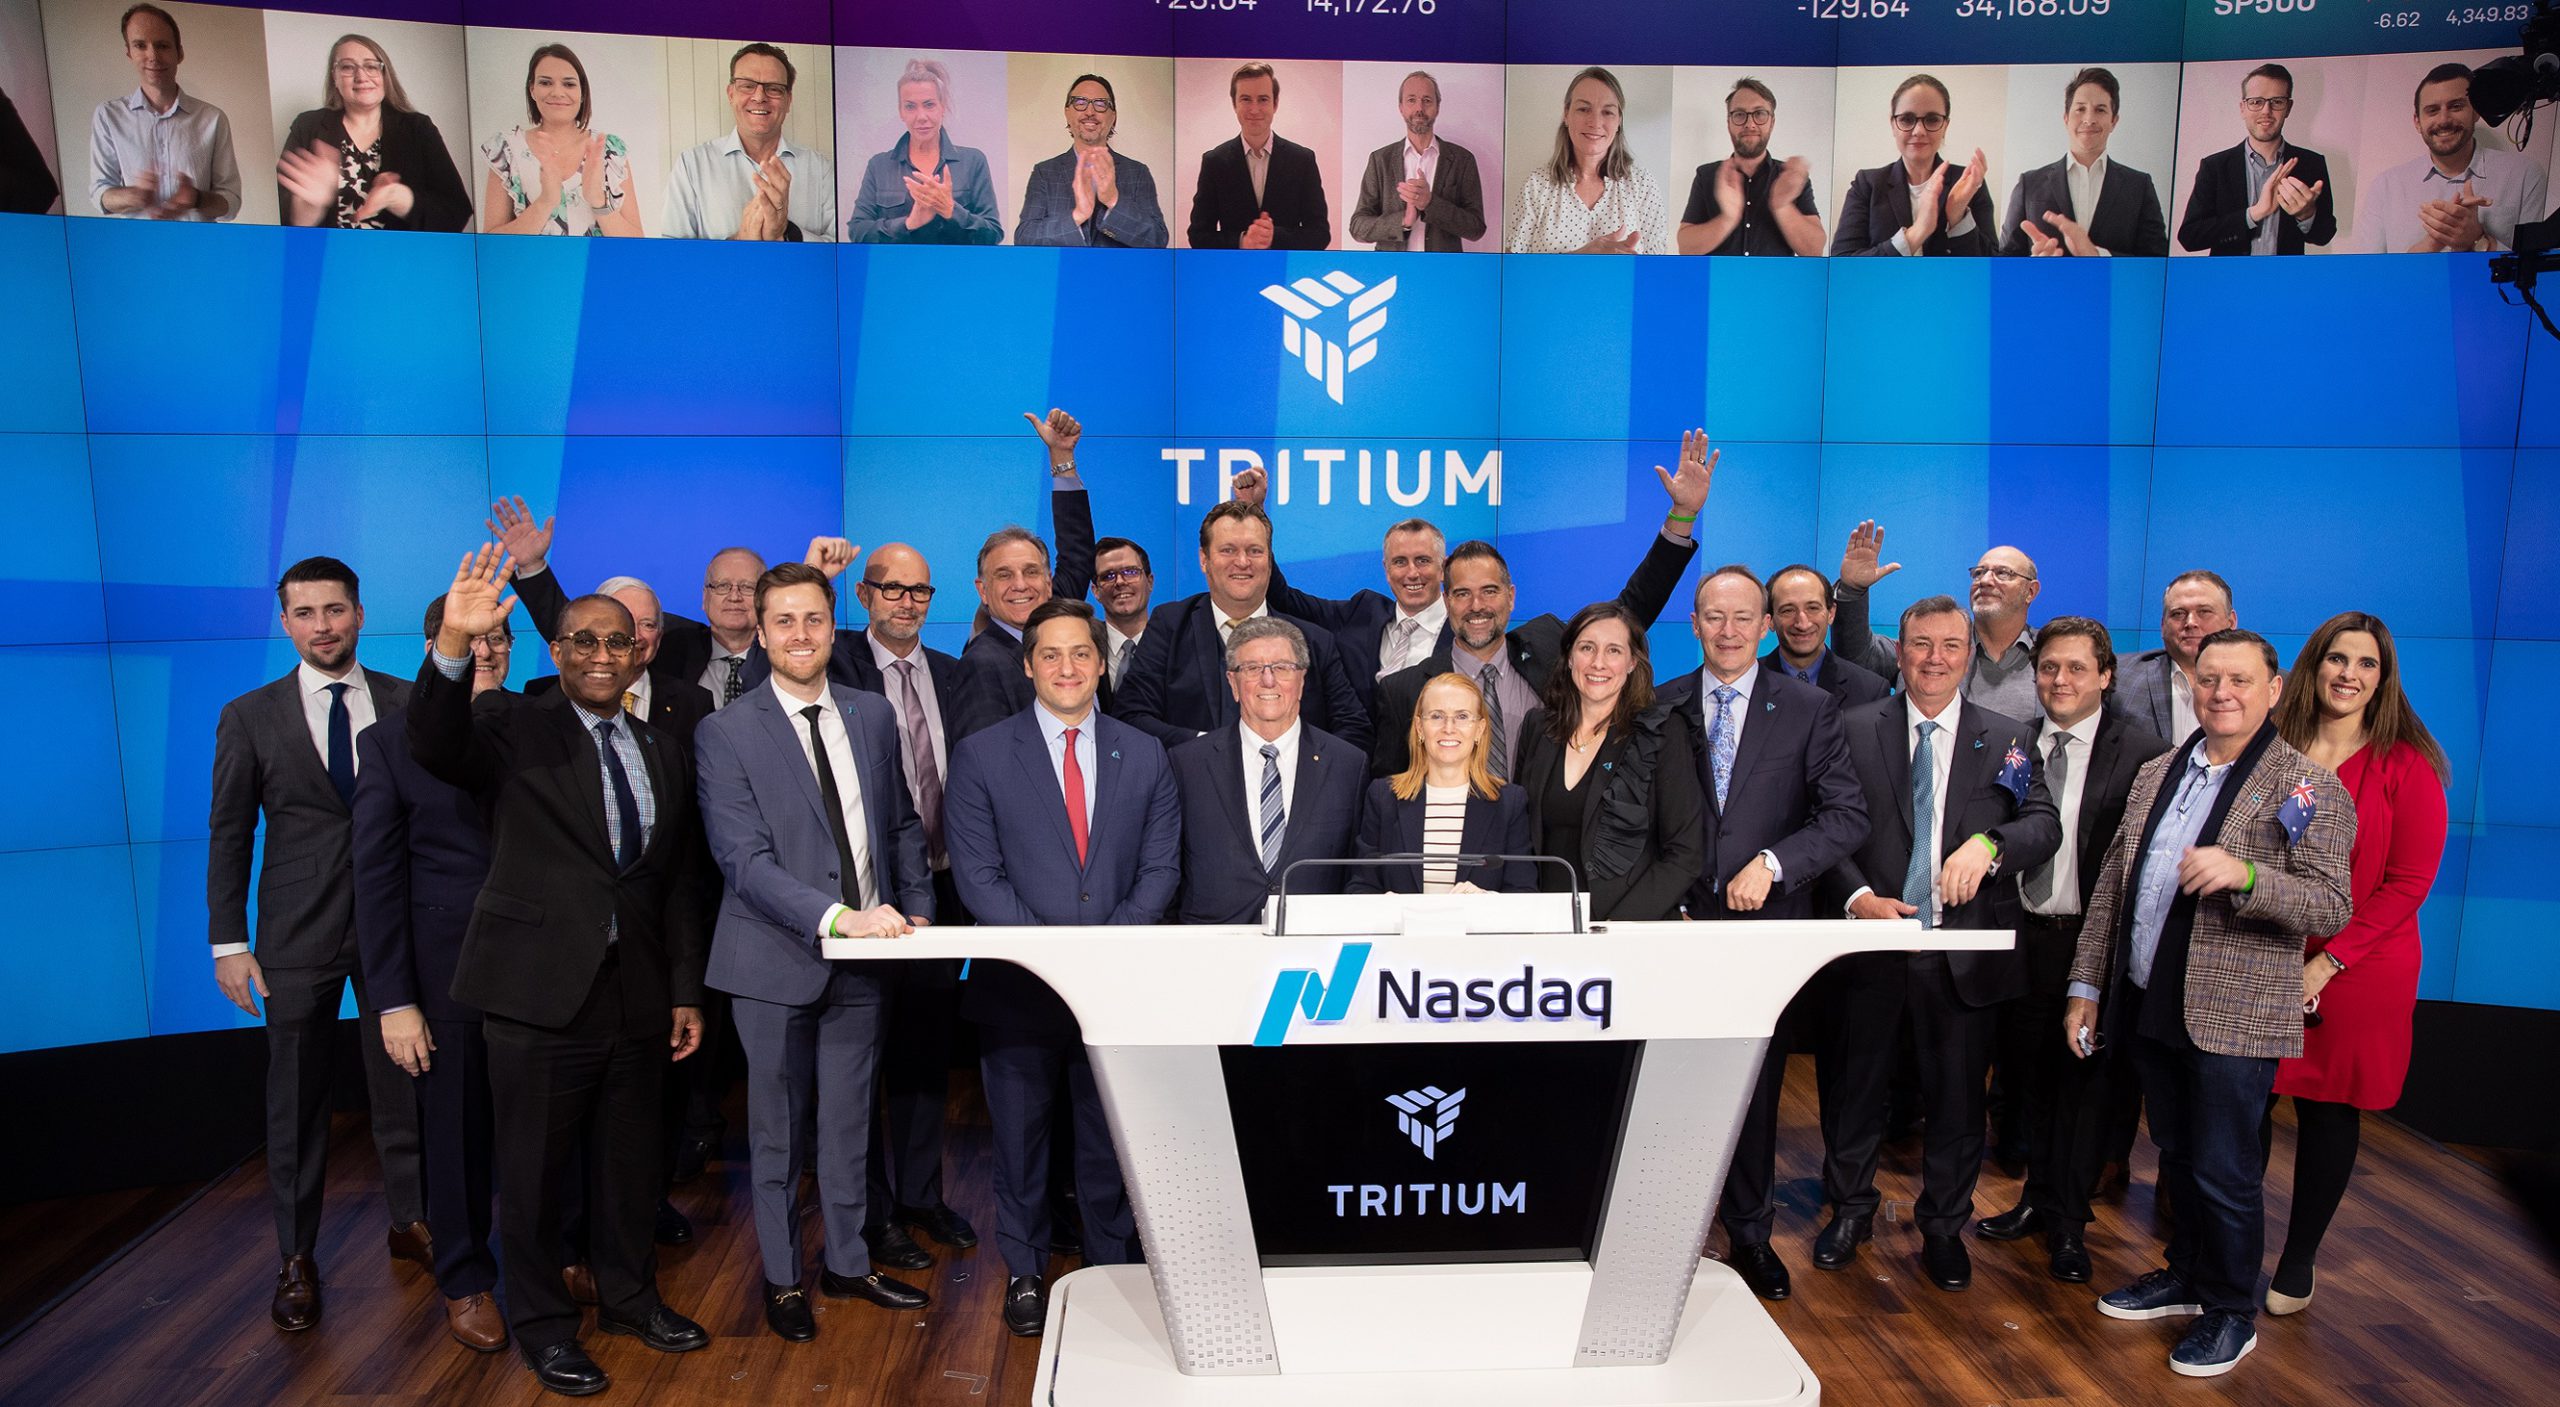 Tritium trading on Nasdaq team photo